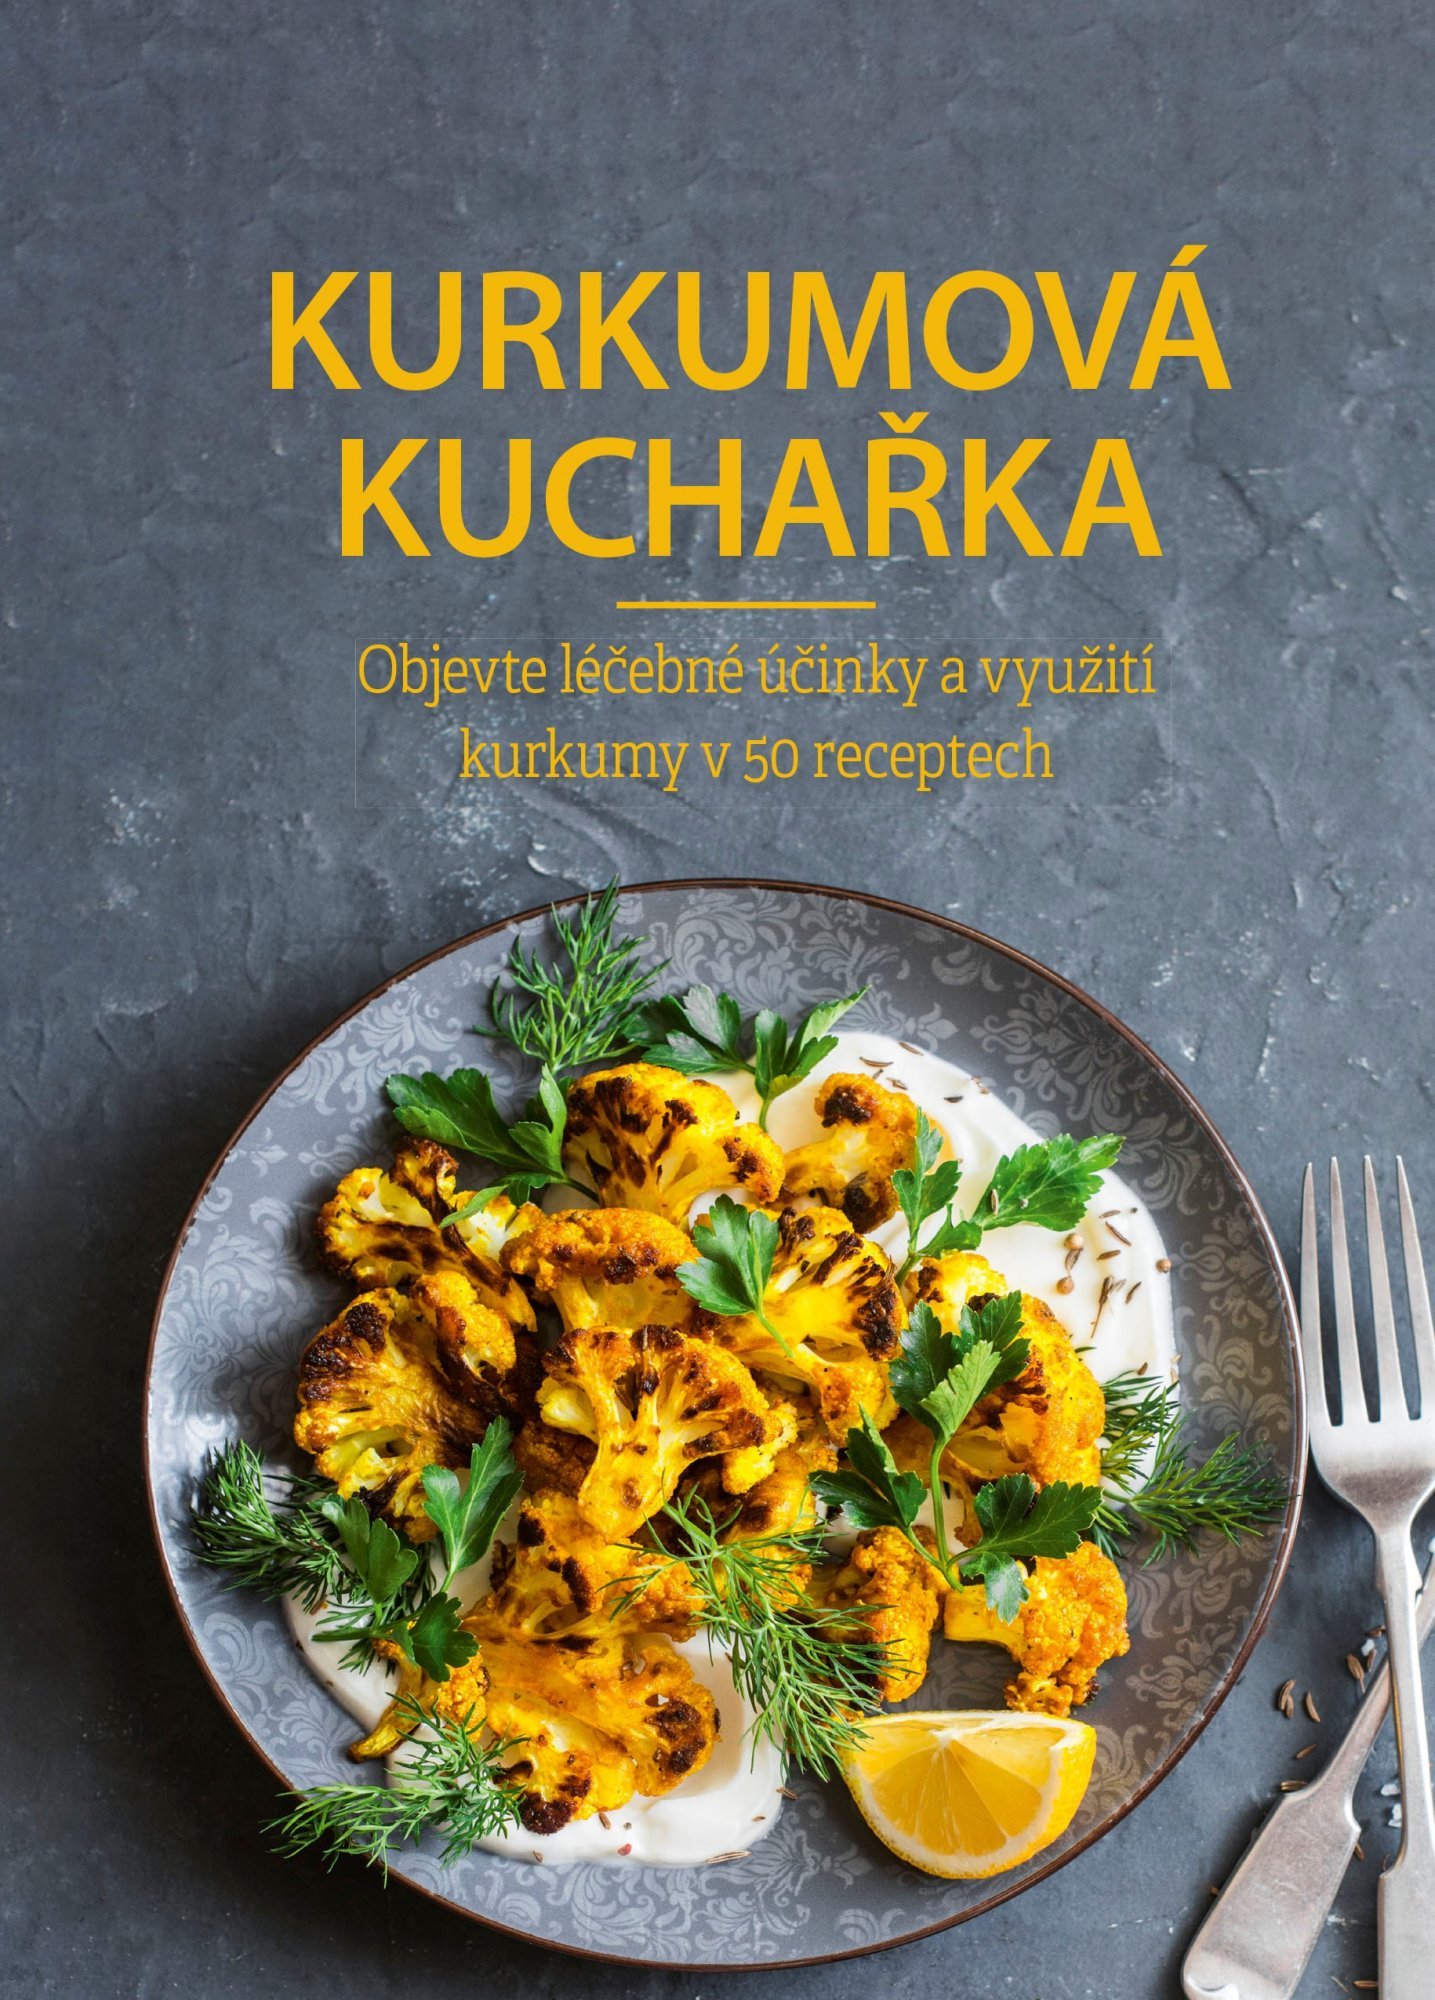 Kurkumová kuchařka - autorů kolektiv